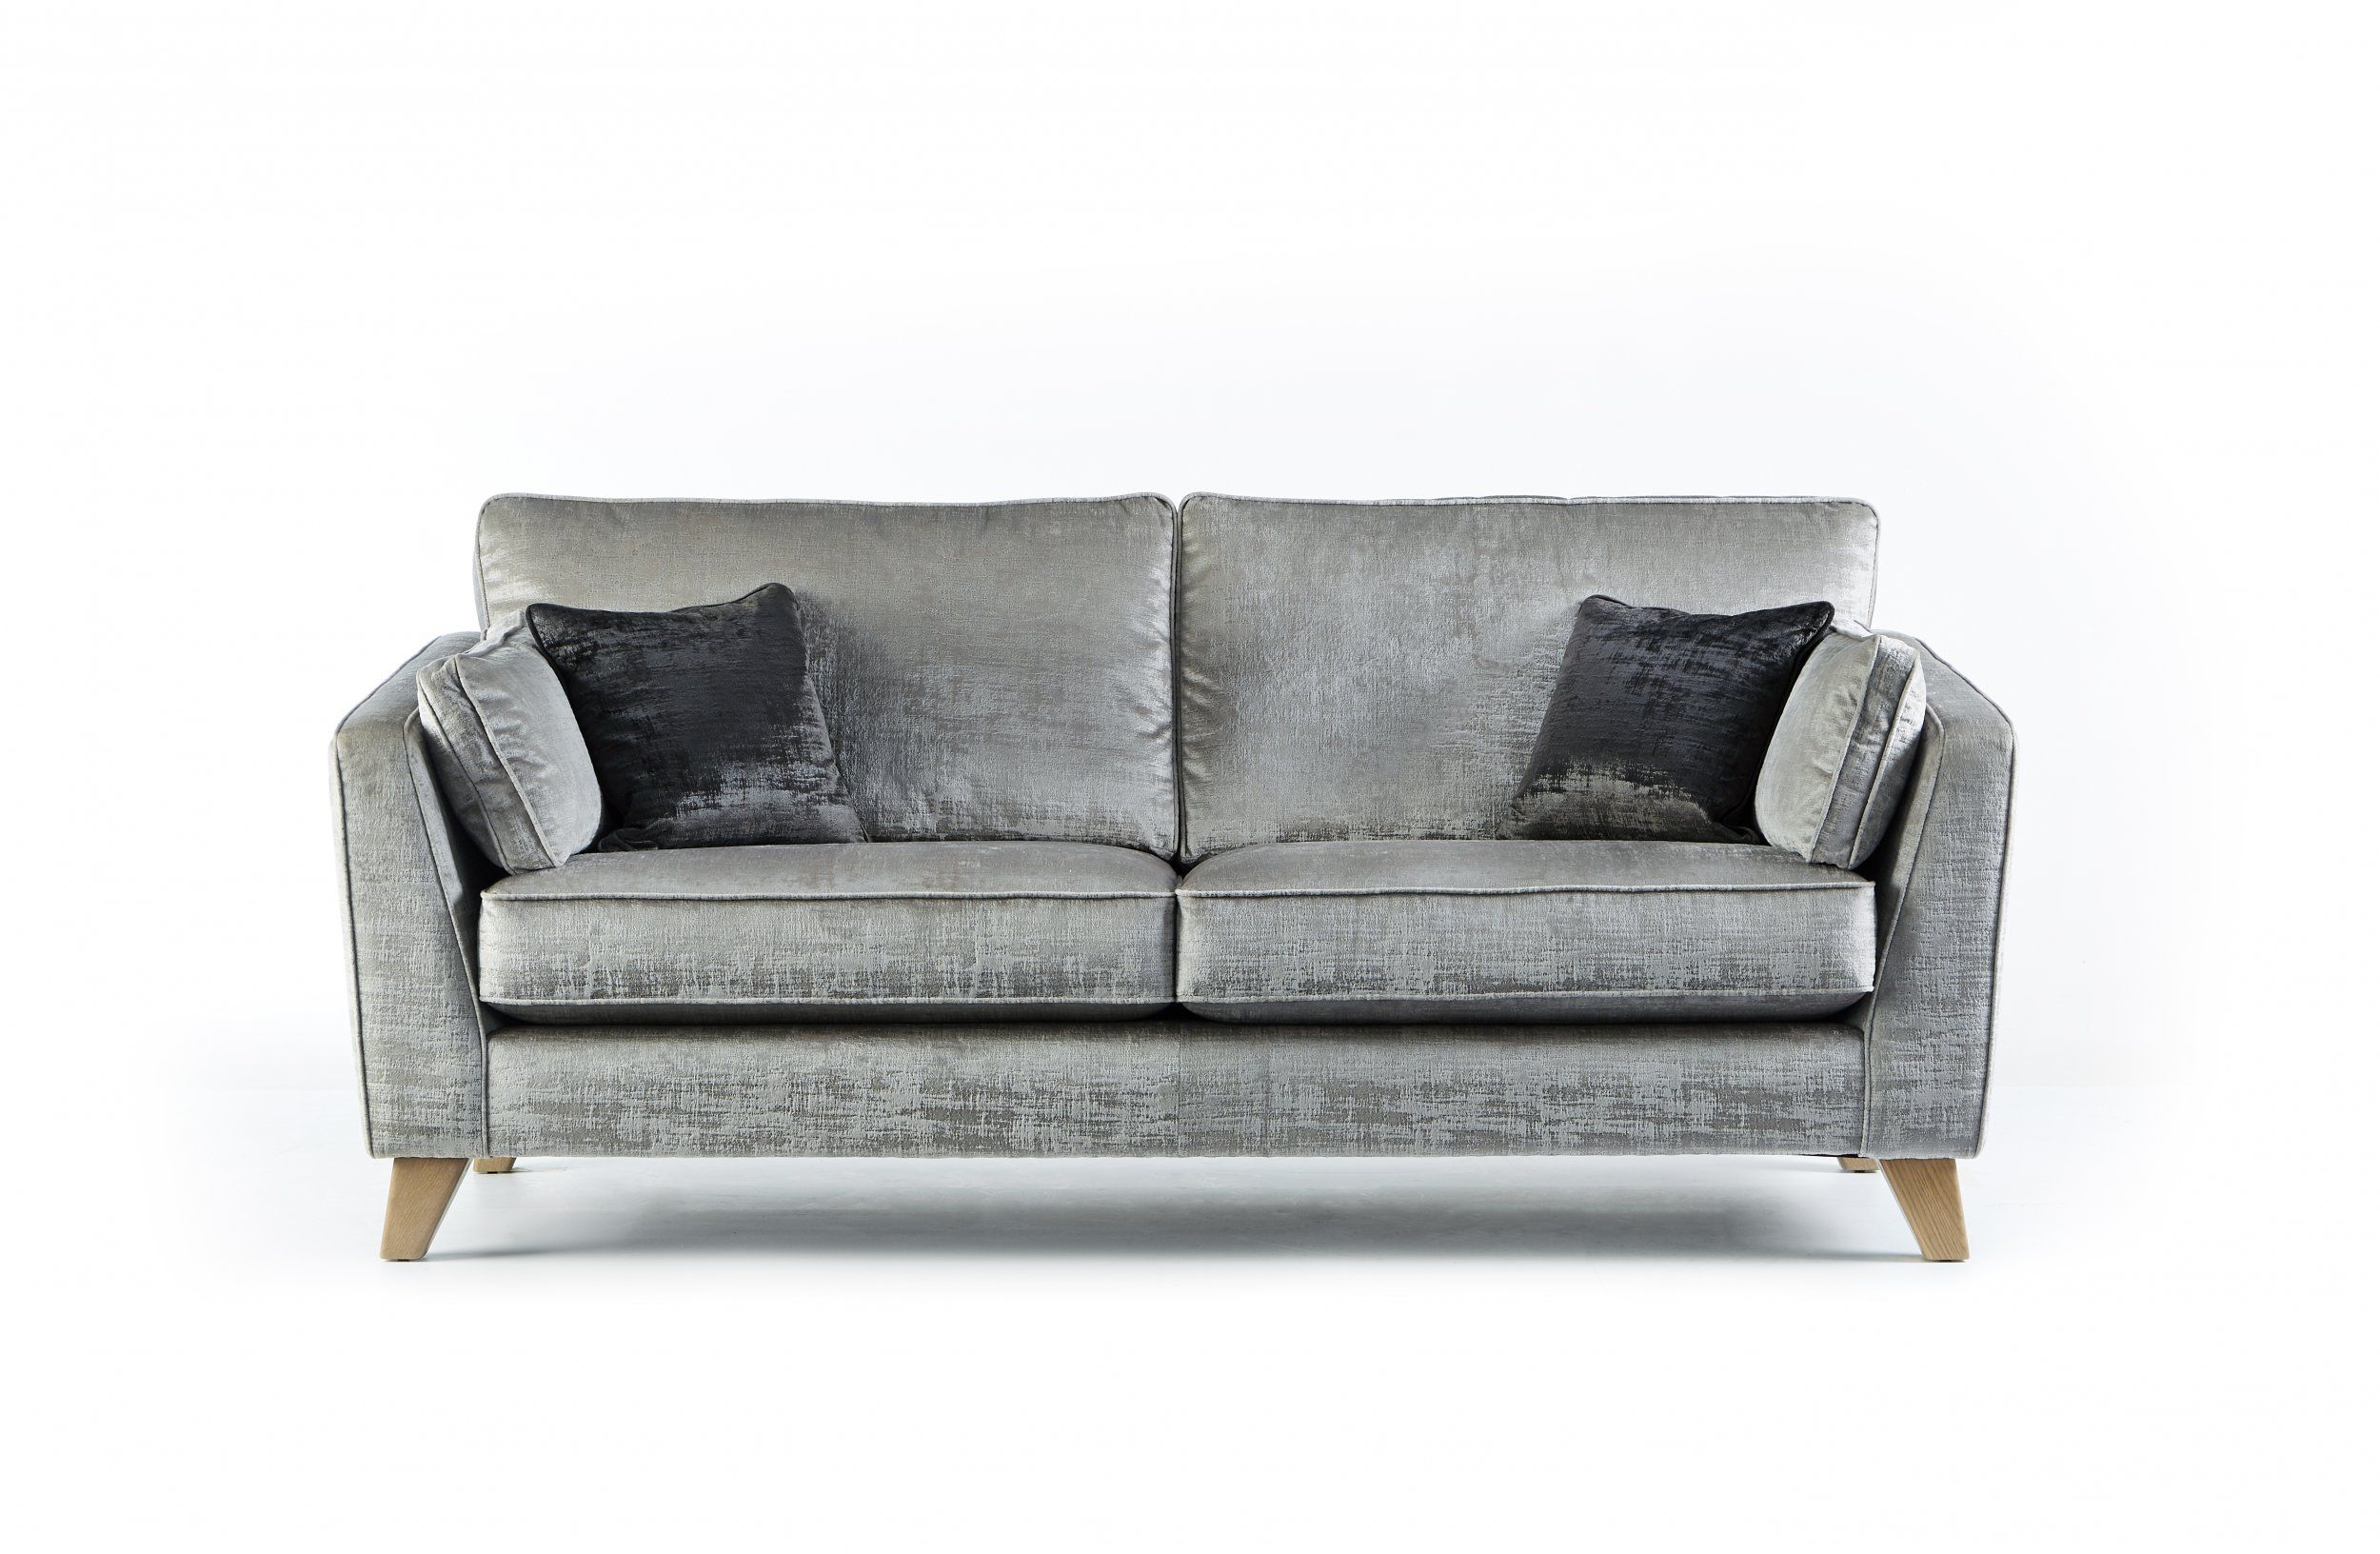 Hampton 3 Seater Sofa | Eyres Furniture With Regard To Hamptons Sofas (View 6 of 15)